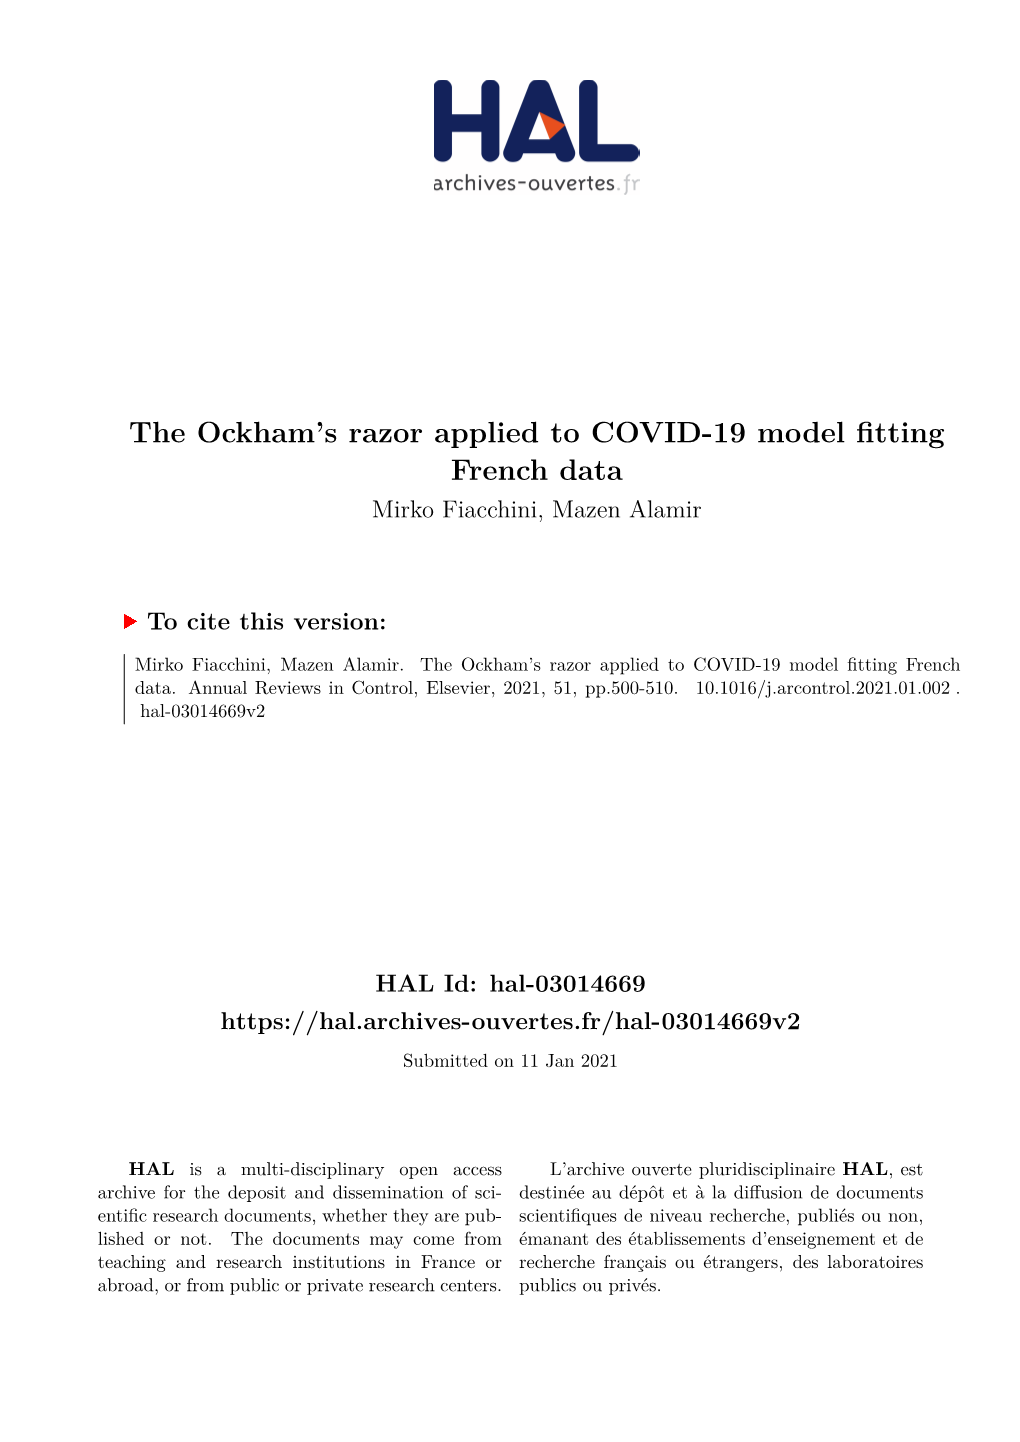 The Ockham's Razor Applied to COVID-19 Model Fitting French Data